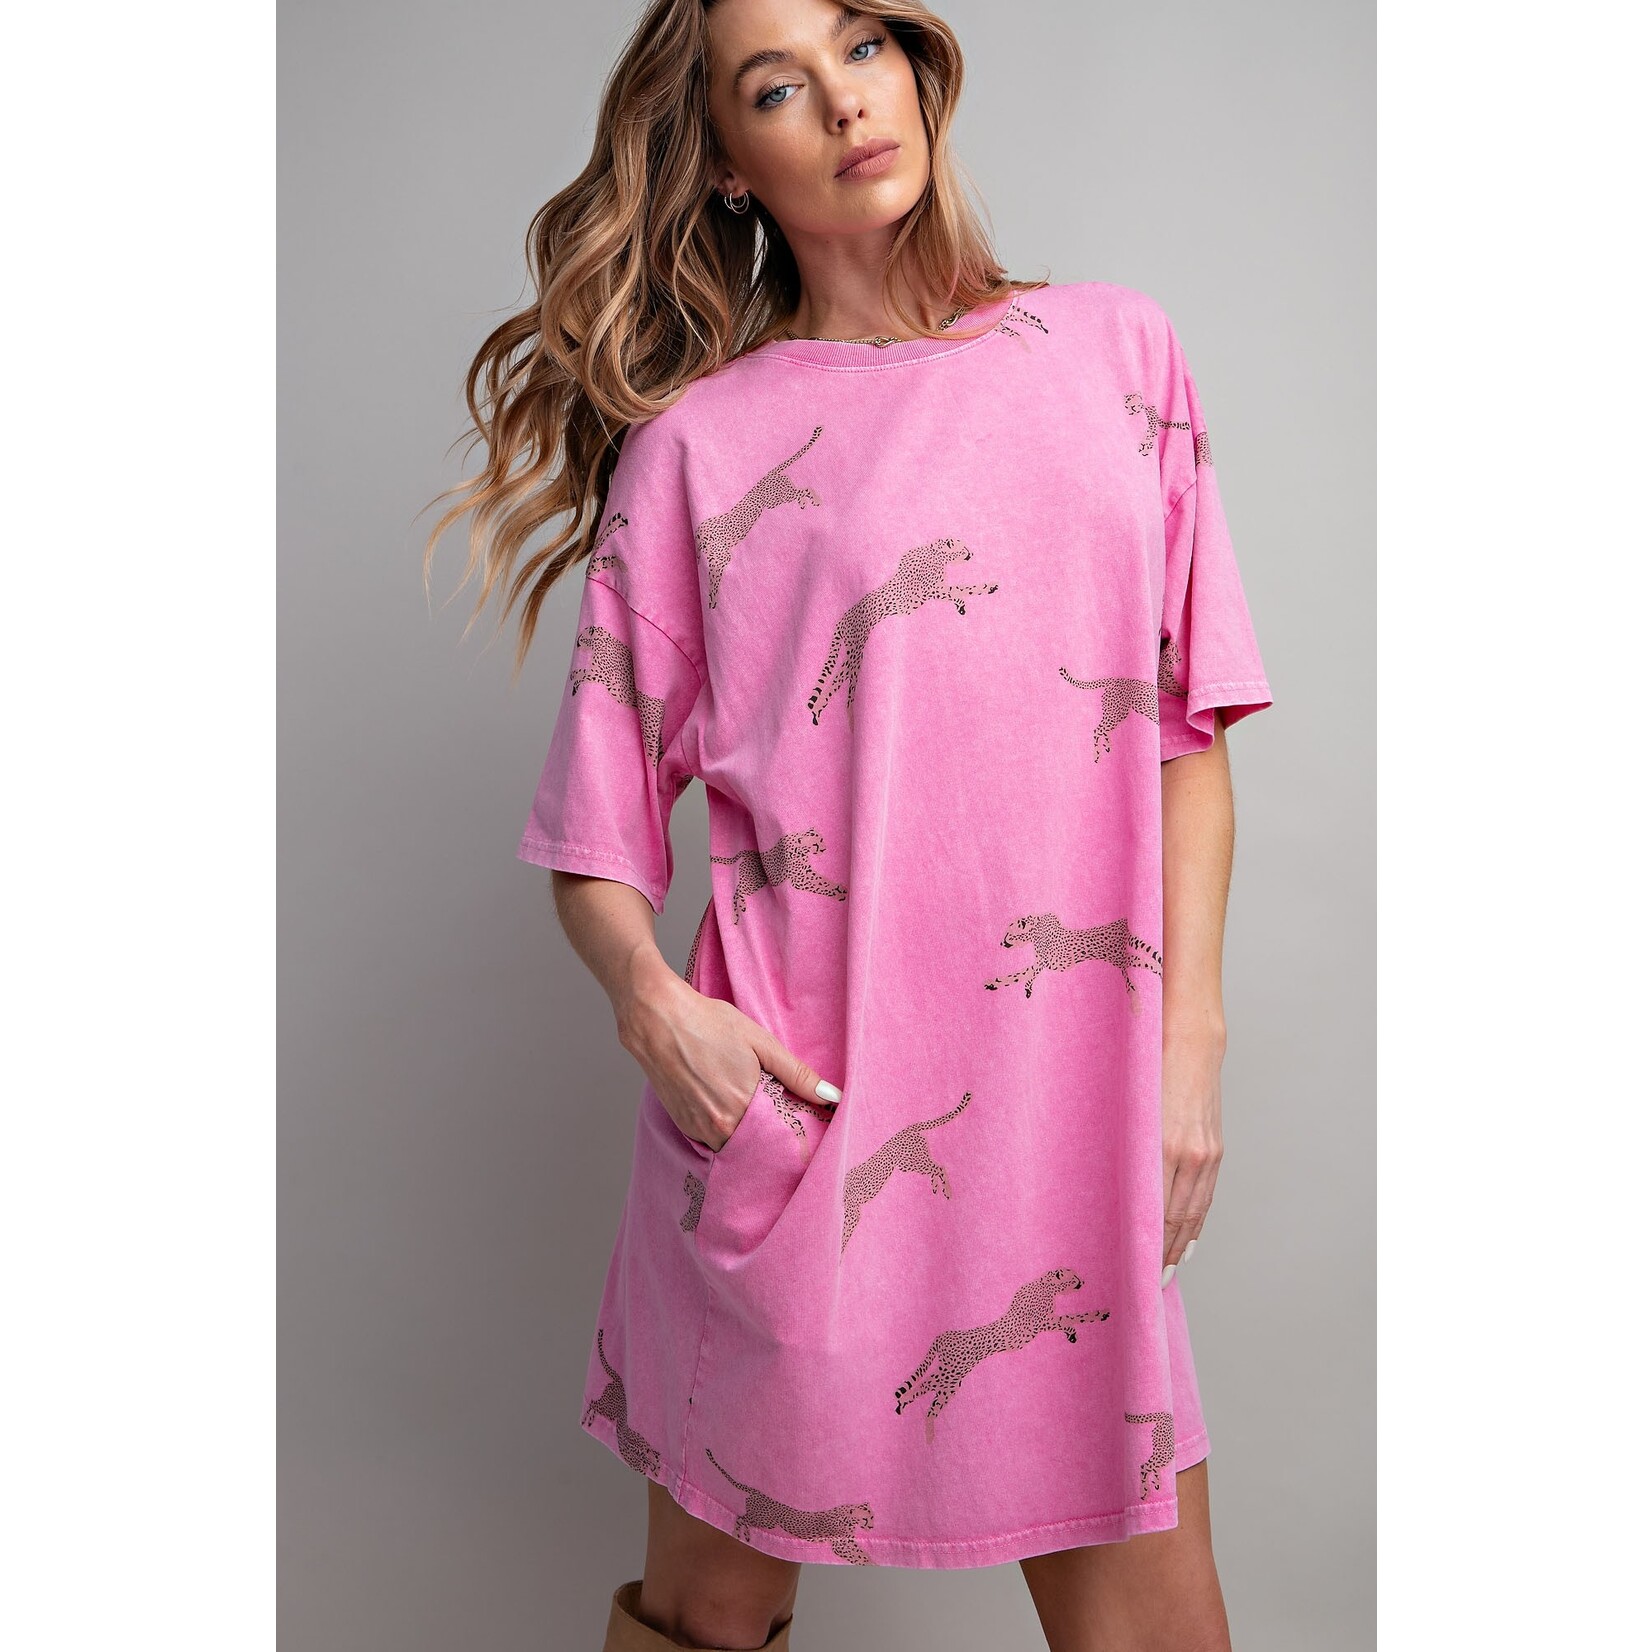 Easel Greer Pink Cheetah T-Shirt Dress